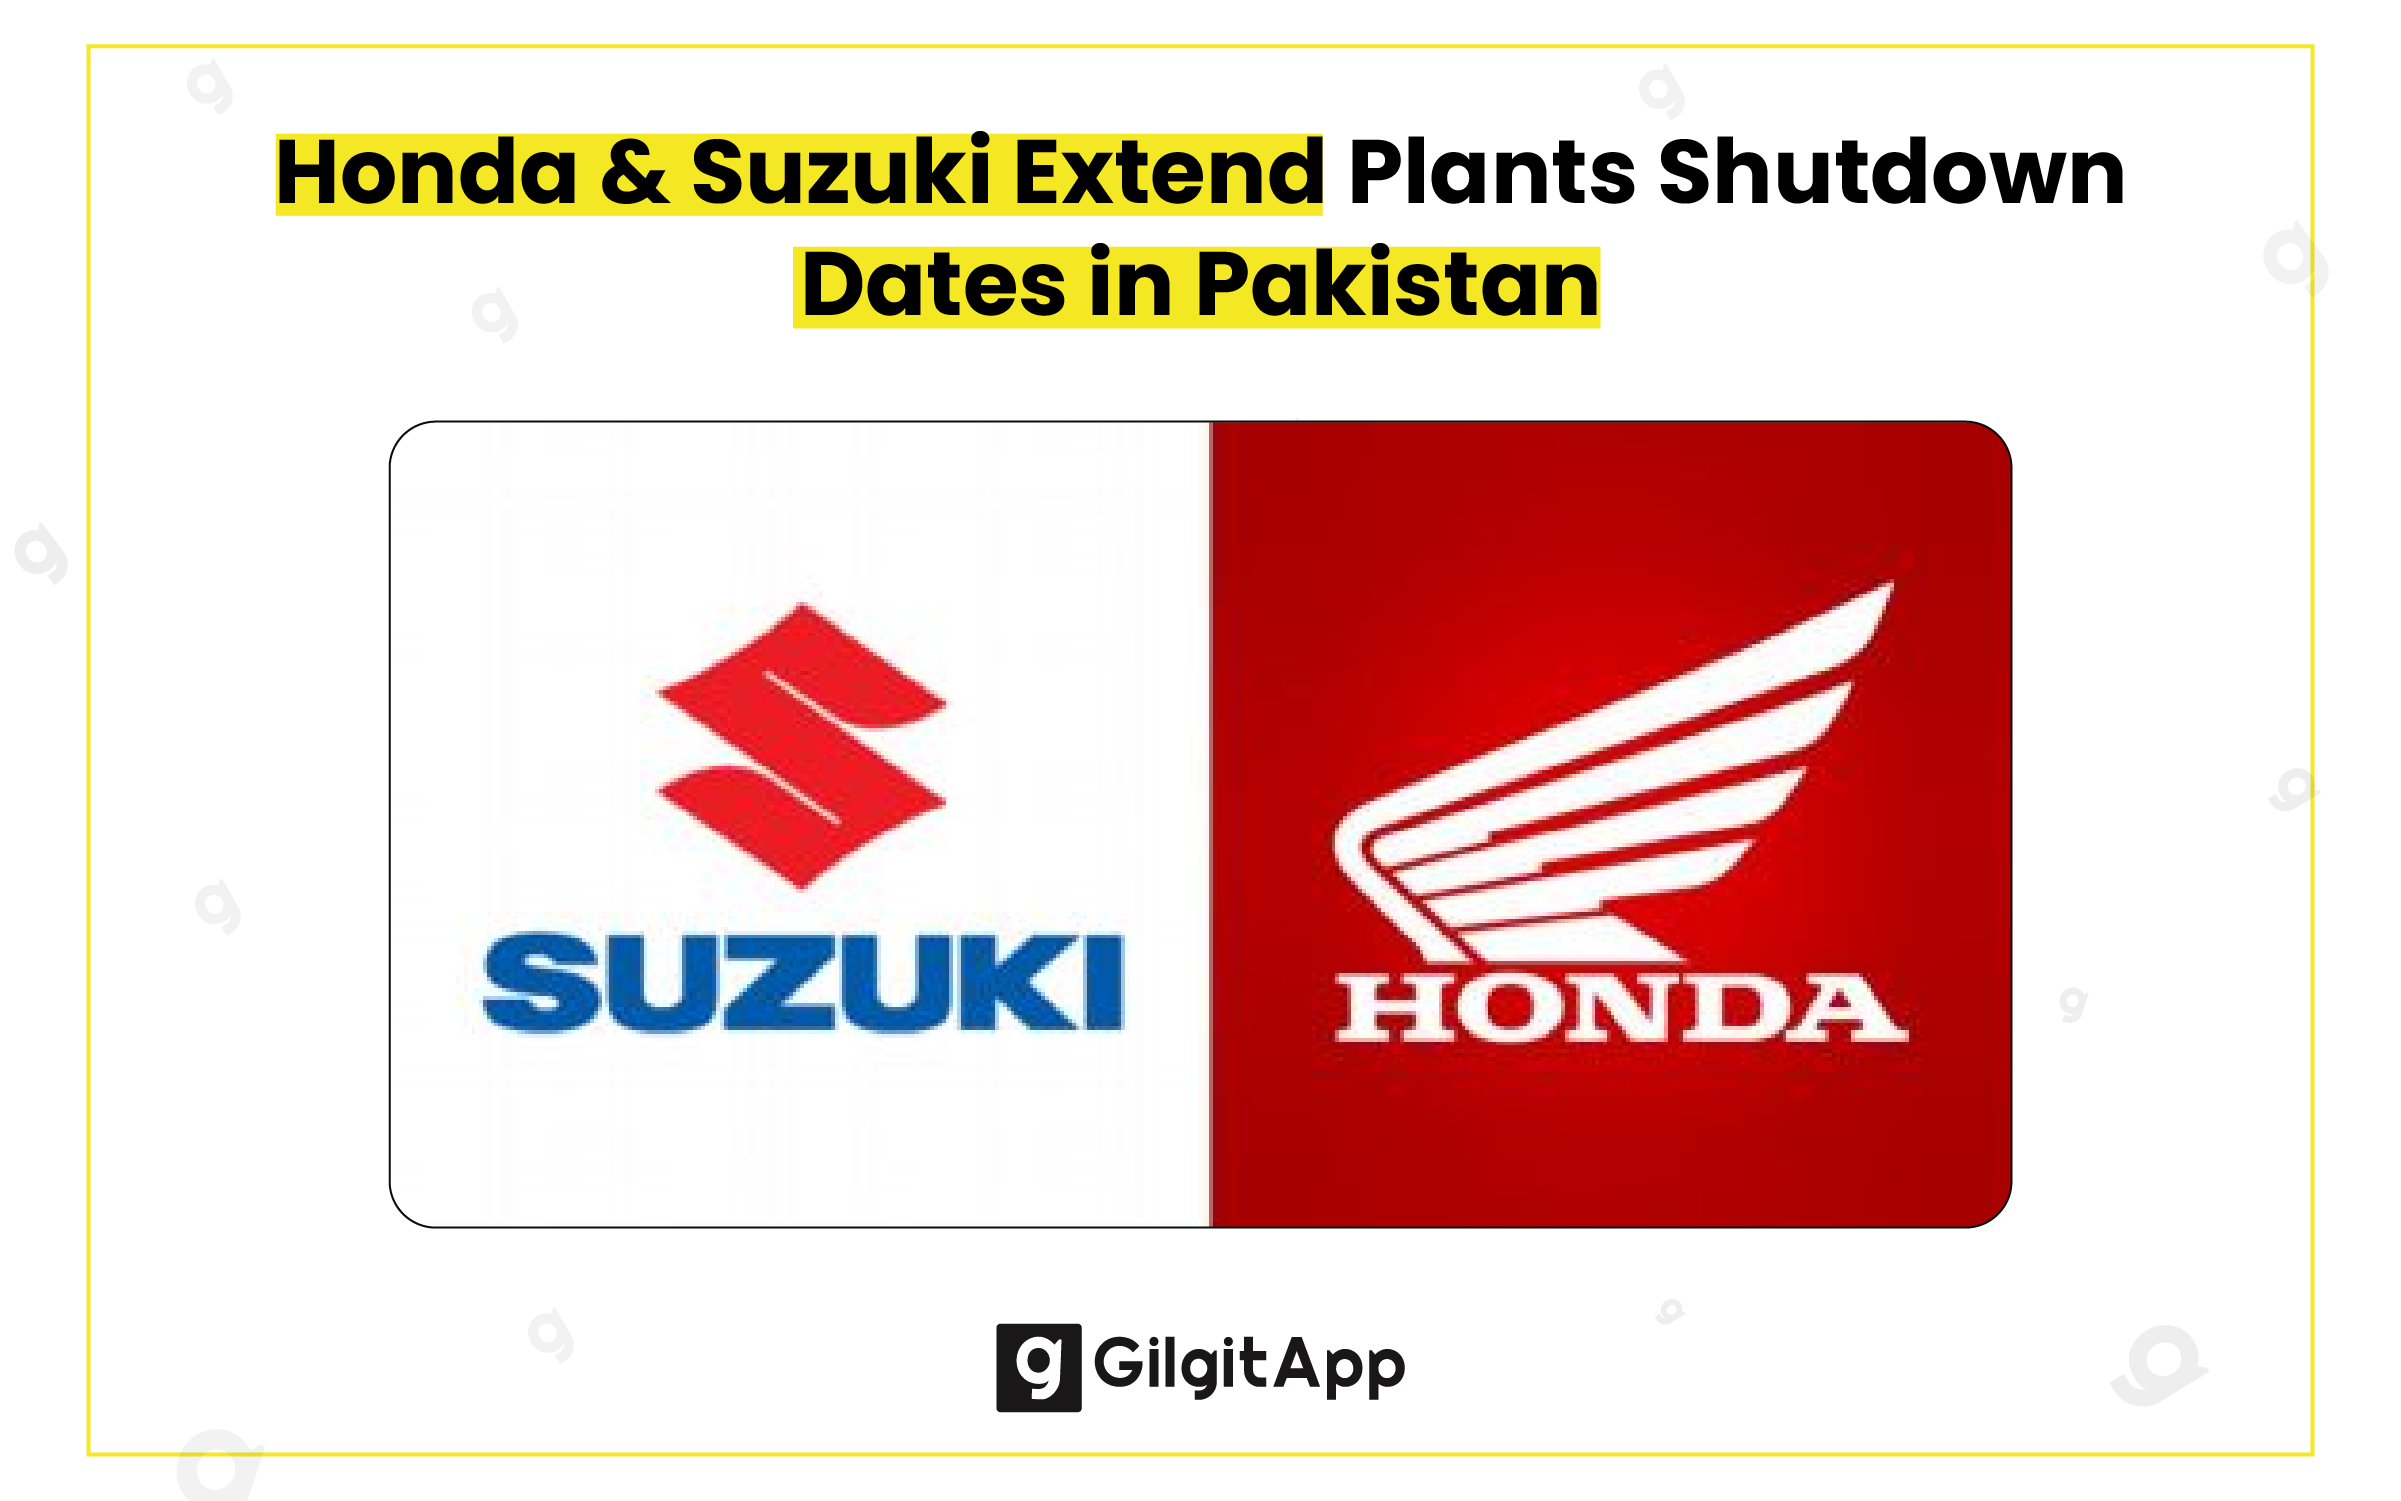 Honda and Suzuki Extend Plants Shutdown Dates in Pakistan